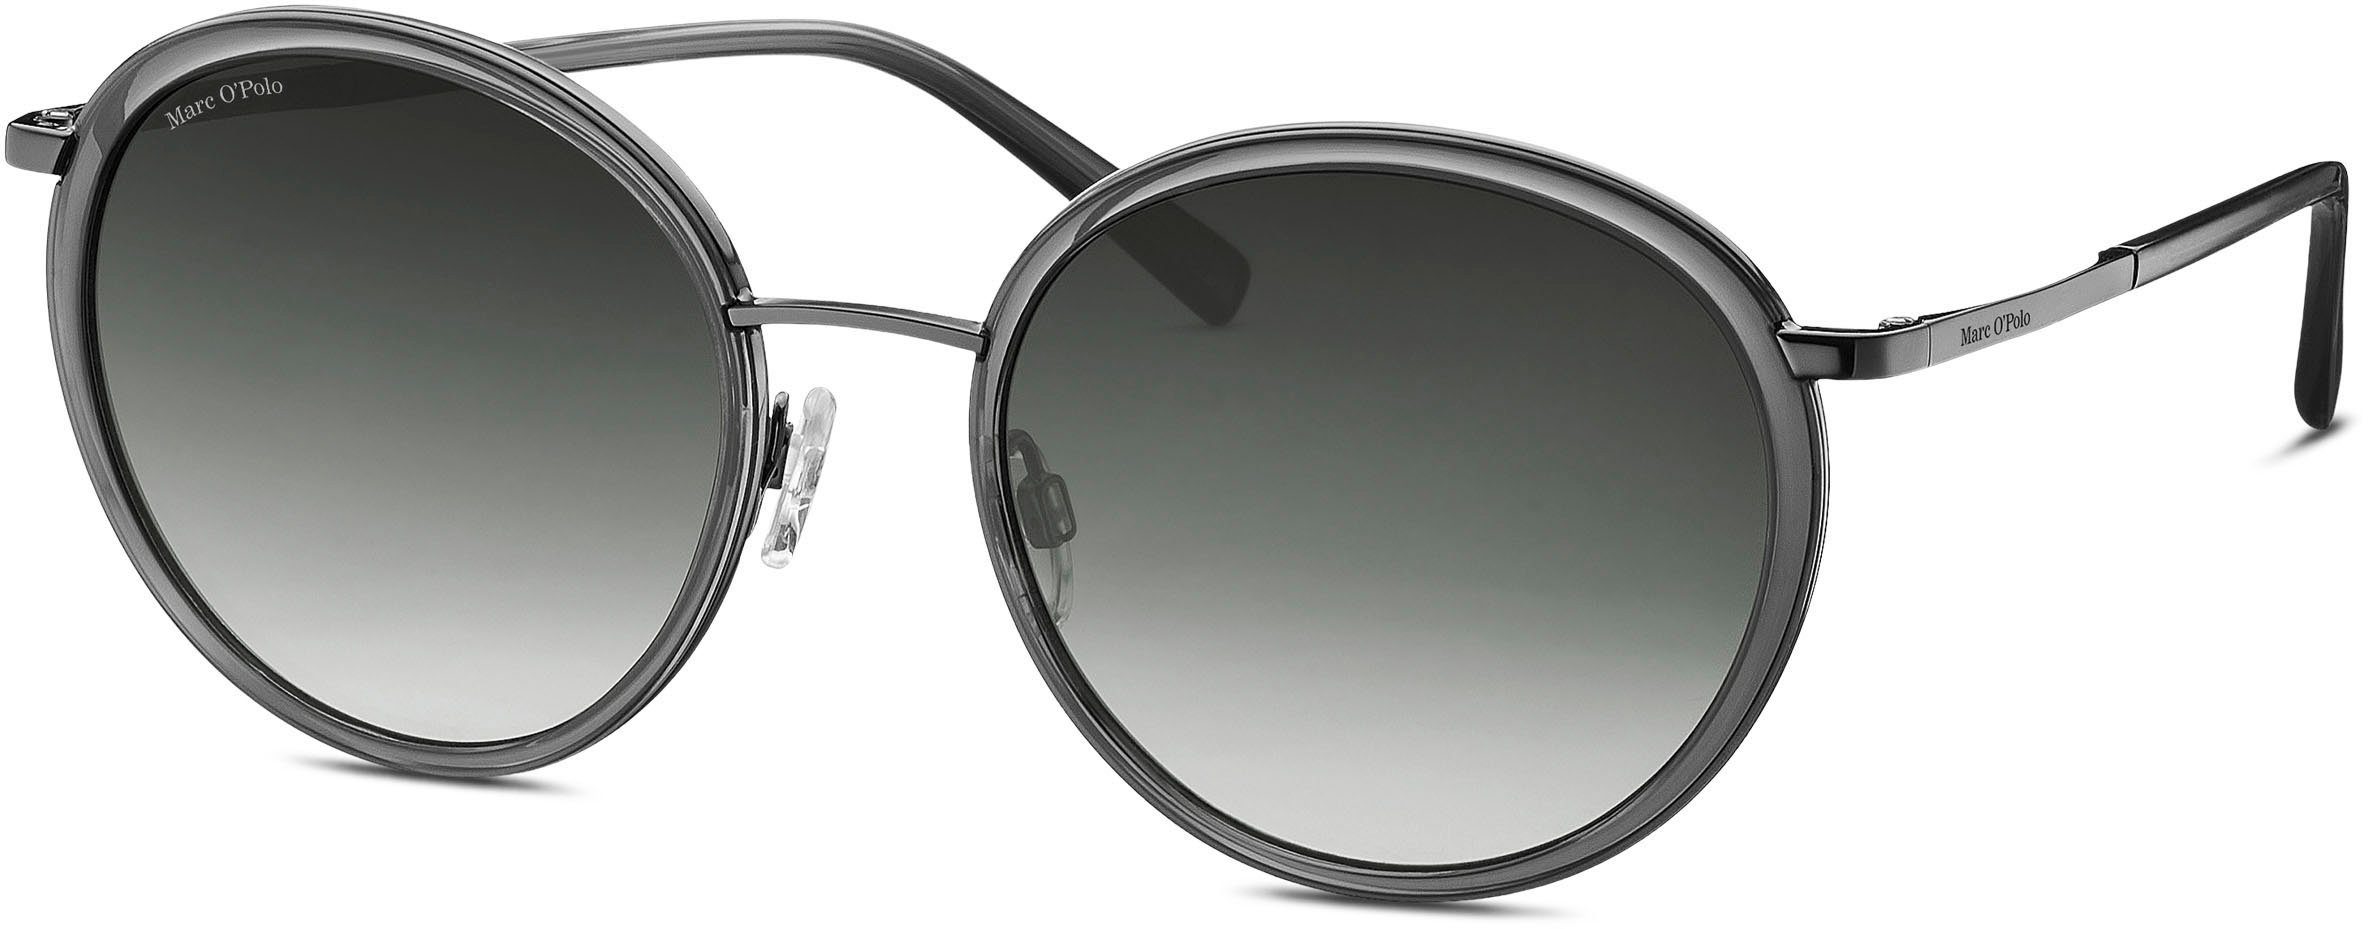 Marc O'Polo Sonnenbrille Modell 505109 Panto-Form grau